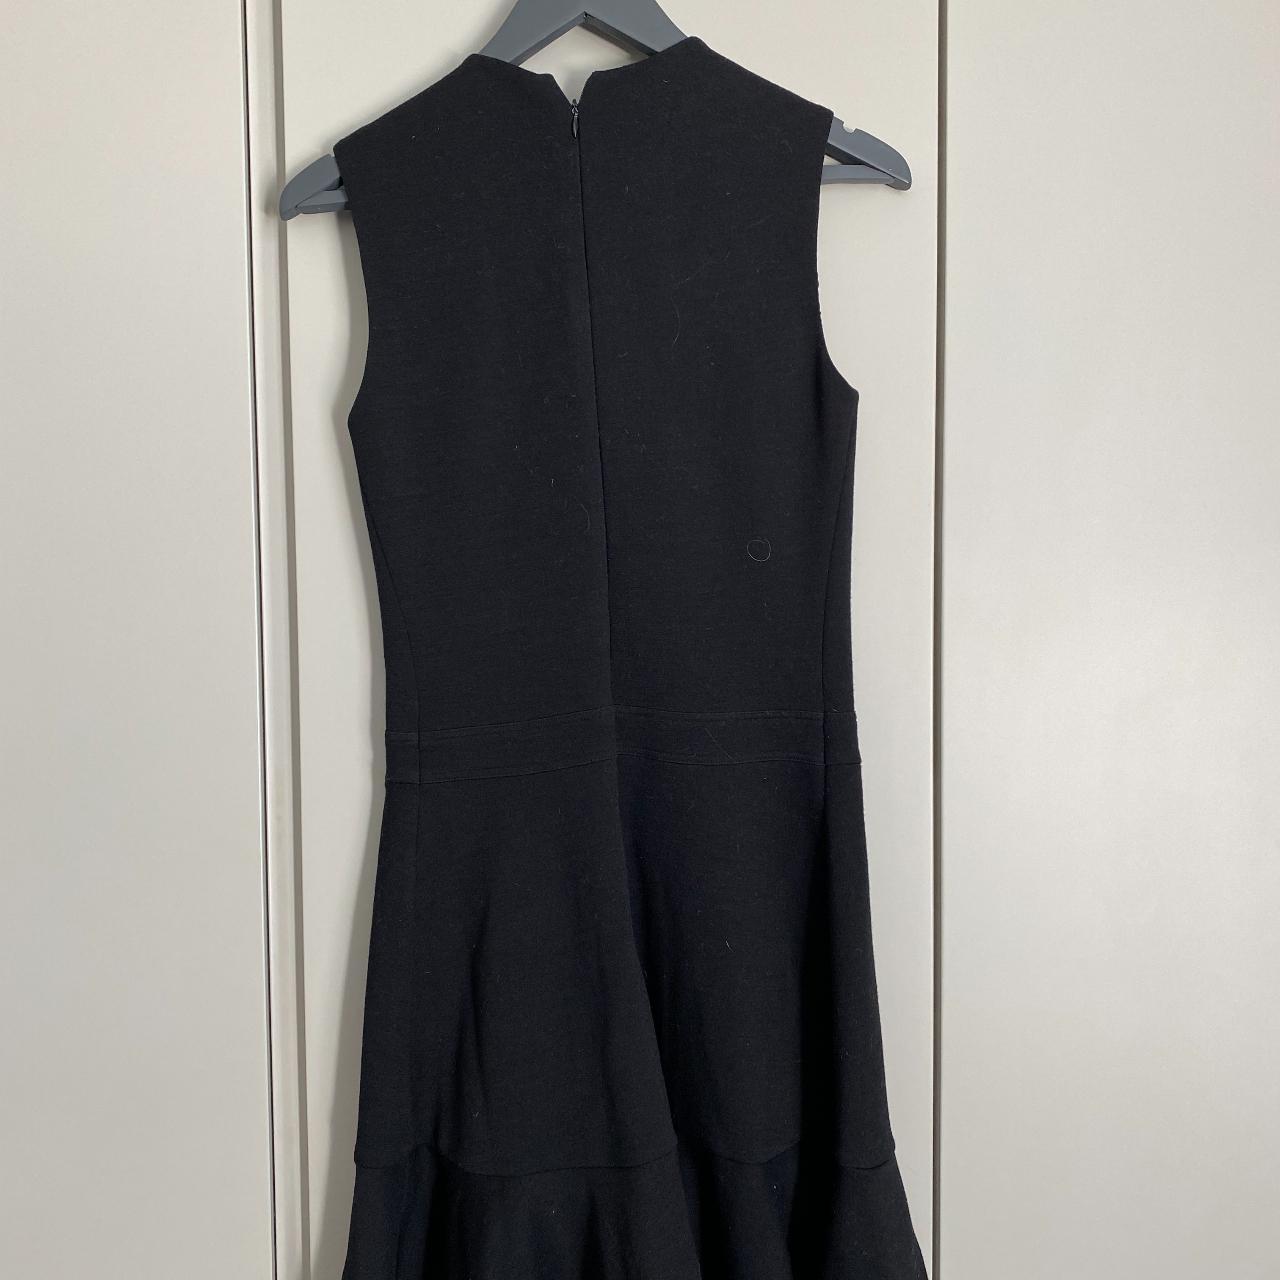 Joseph black mini dress with front pleat details and... - Depop